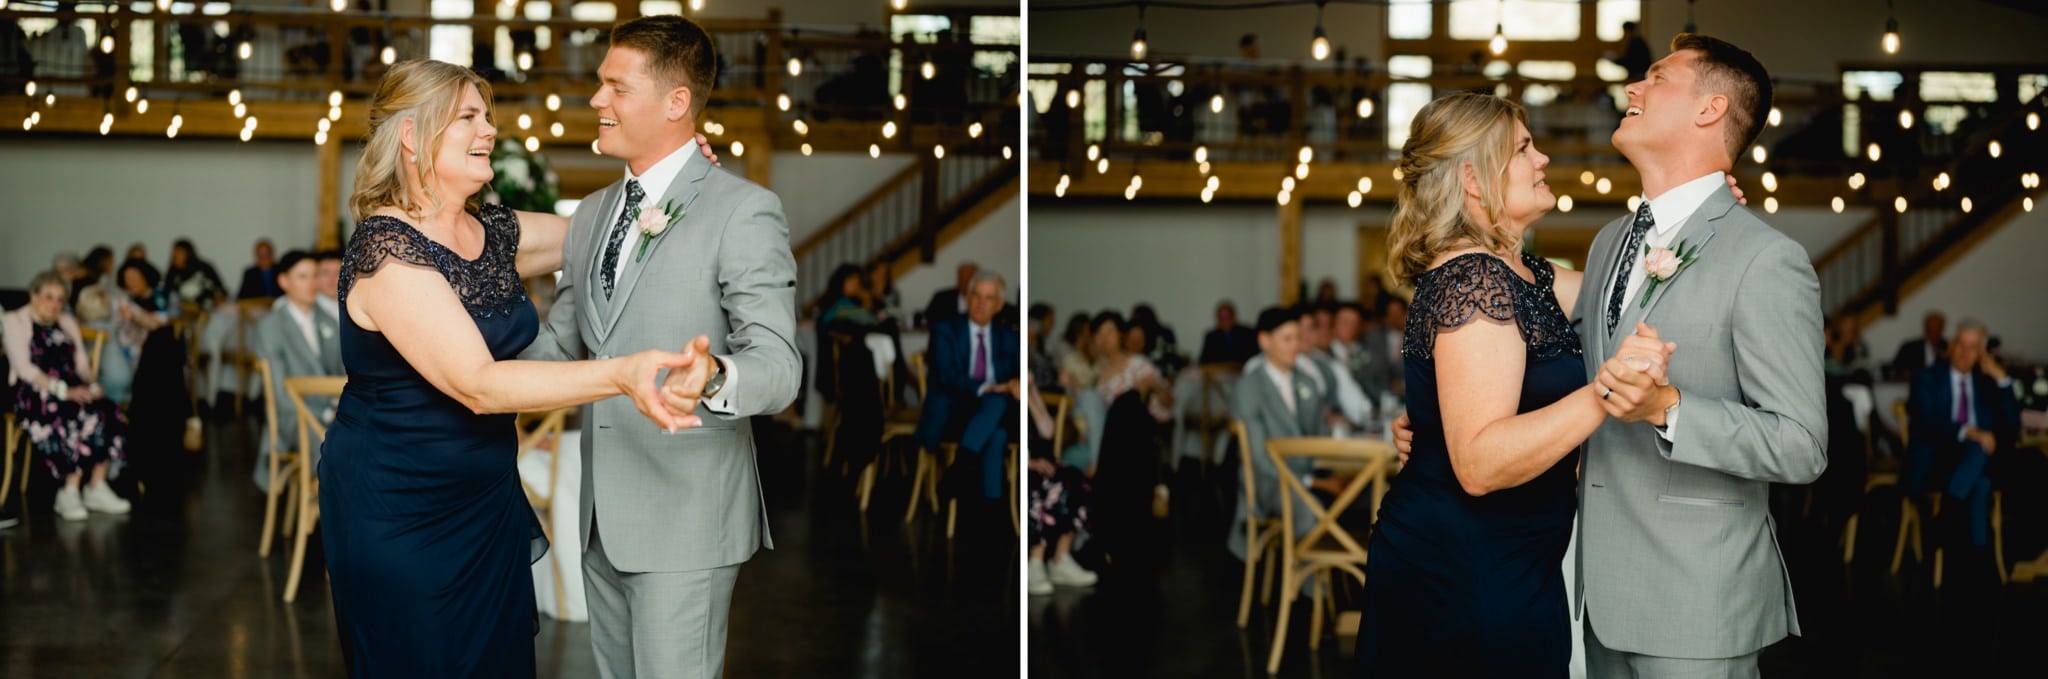 carper winery wedding reception photos